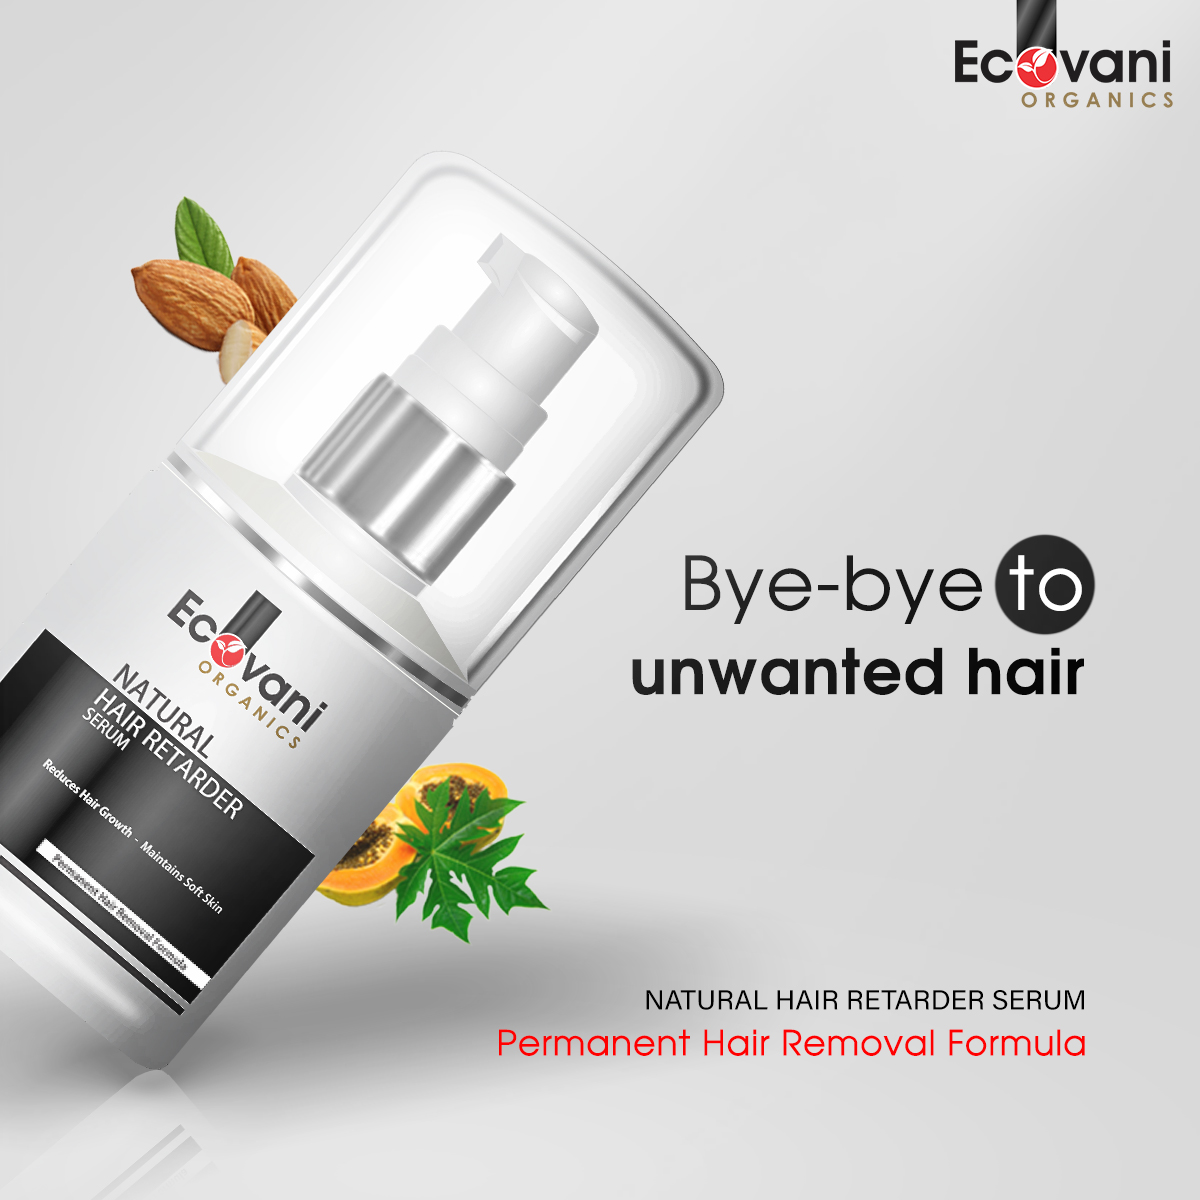 Ecovani Organics on Twitter: "Ecovani Natural Hair Retarder restringe...